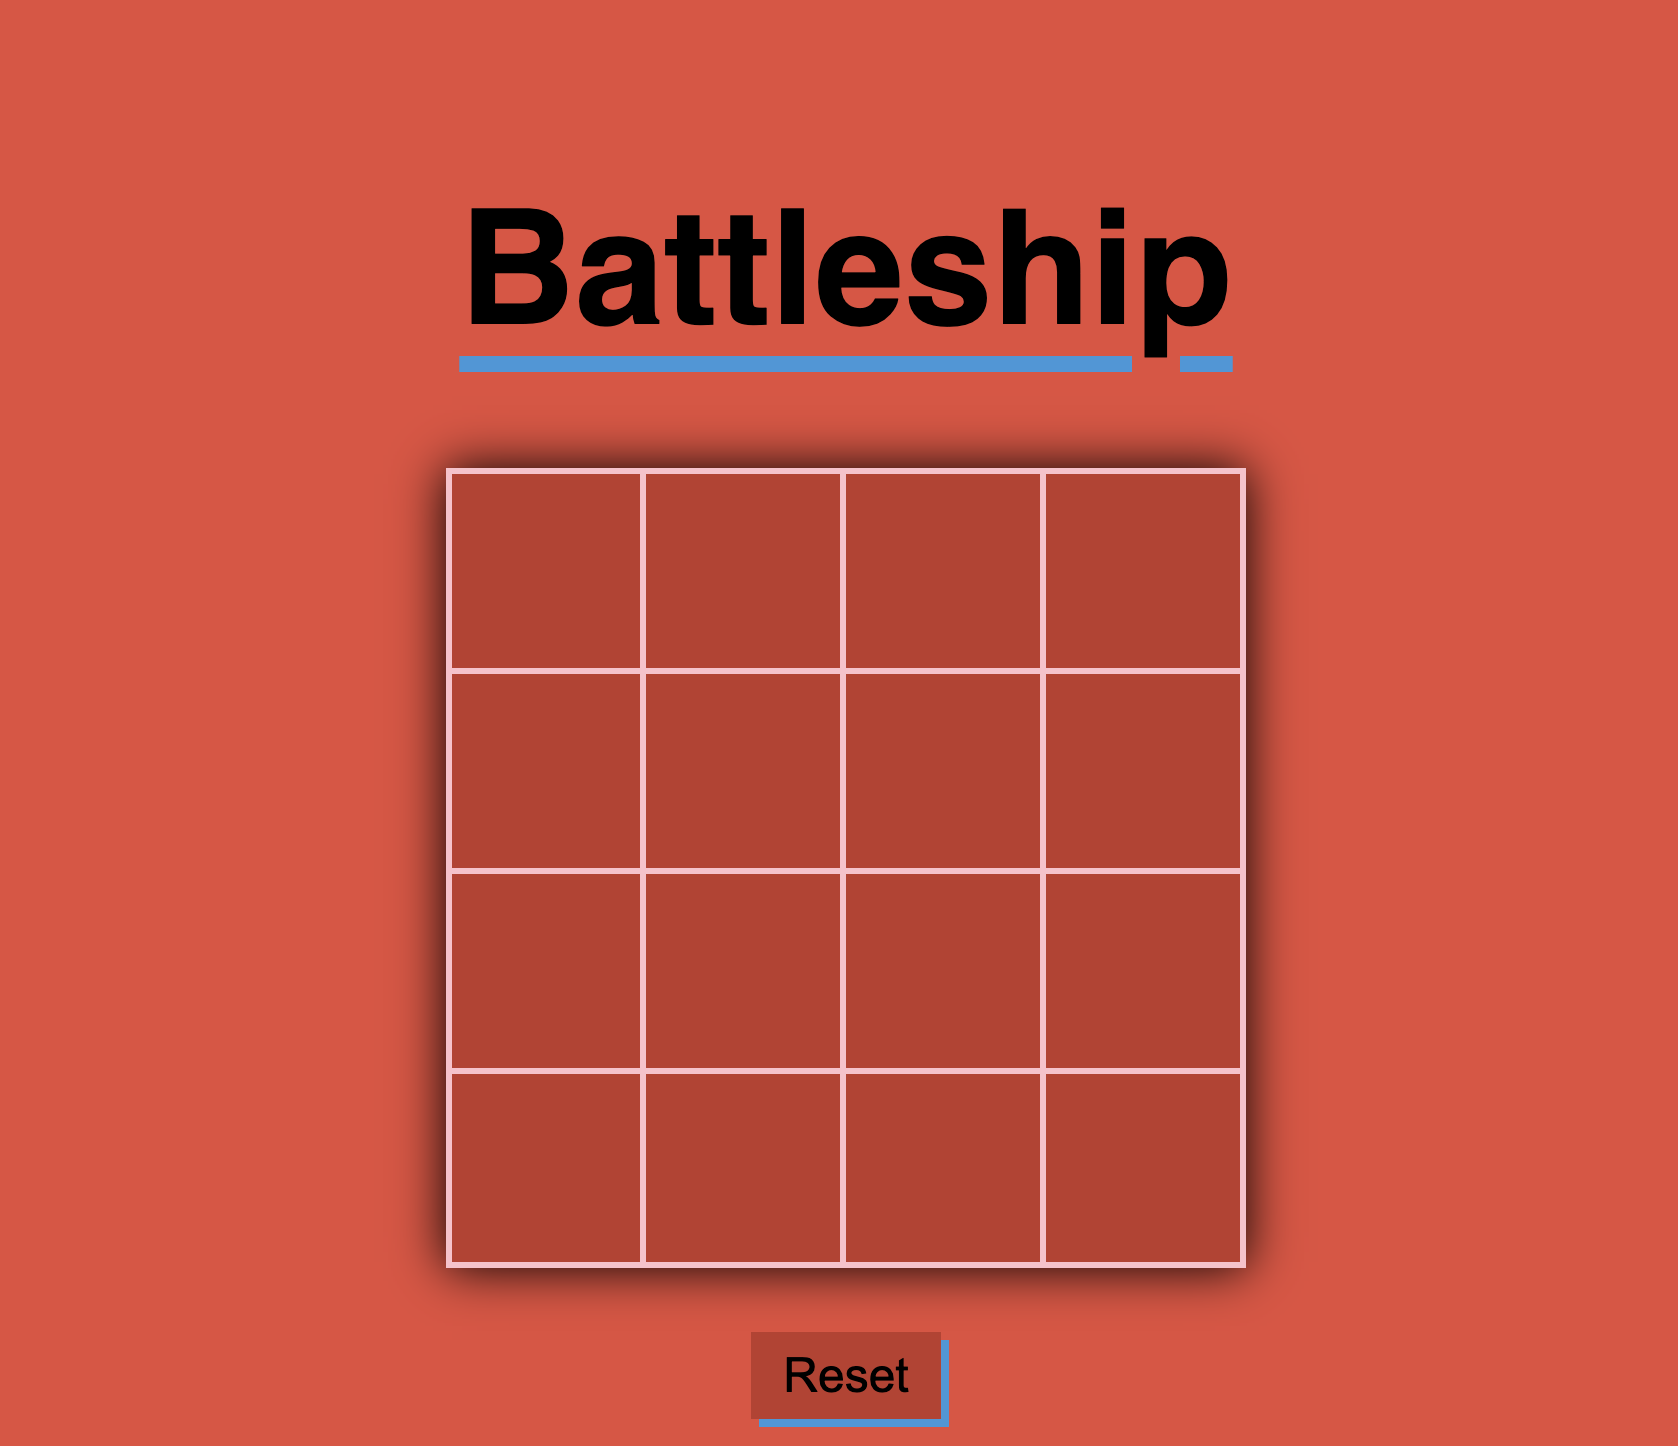 Battleship Game Project